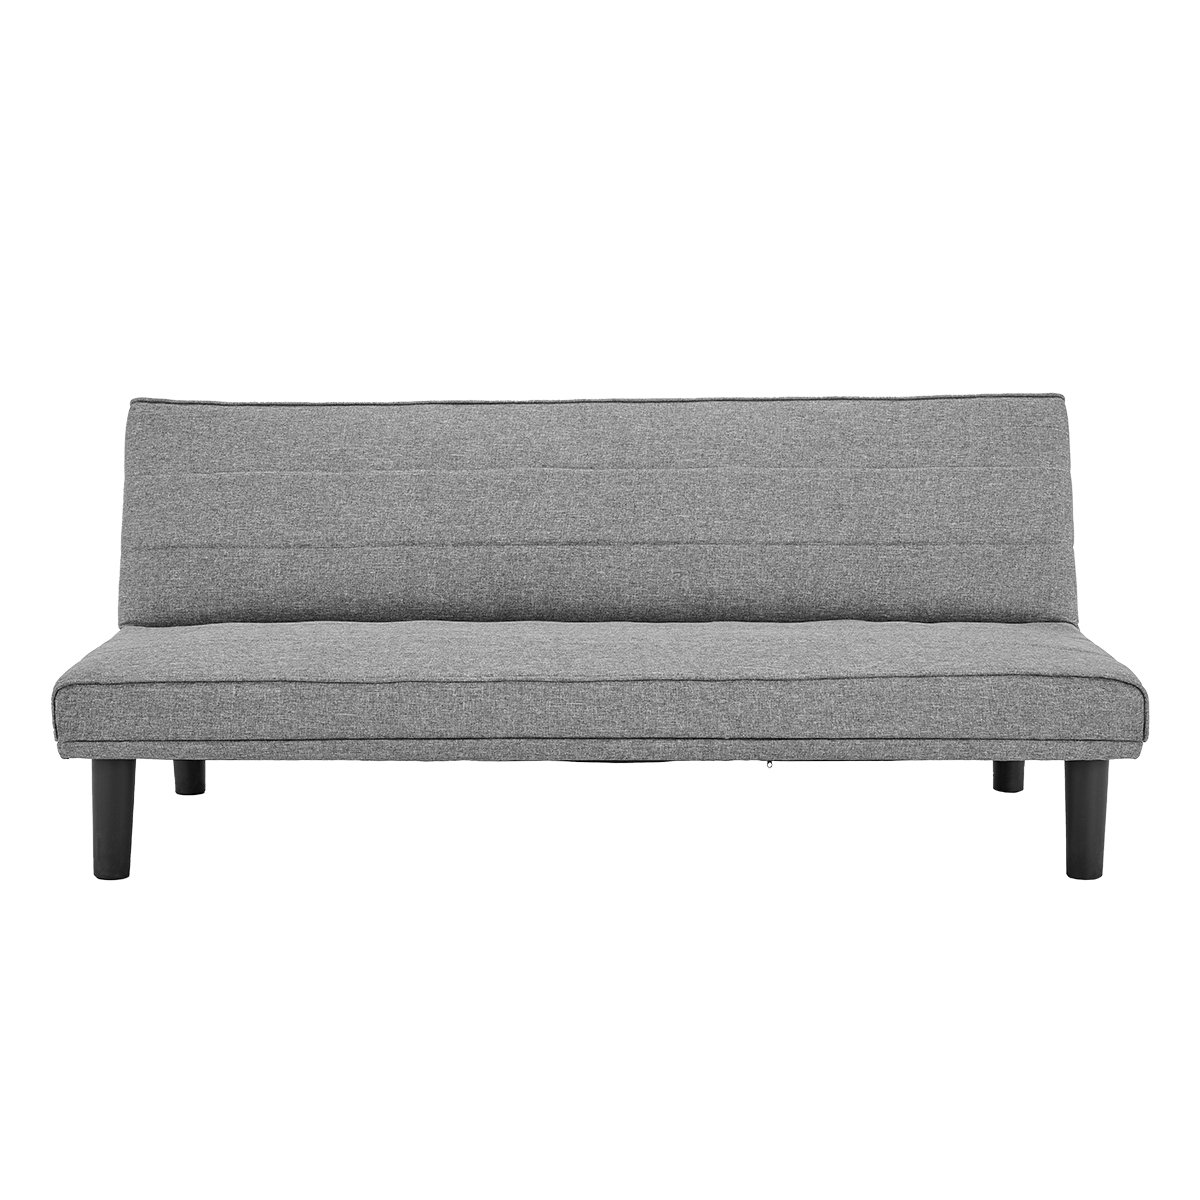 Sarantino 3 Seater M 2620 Modular Linen Sofa Bed Couch - Dark Grey 1